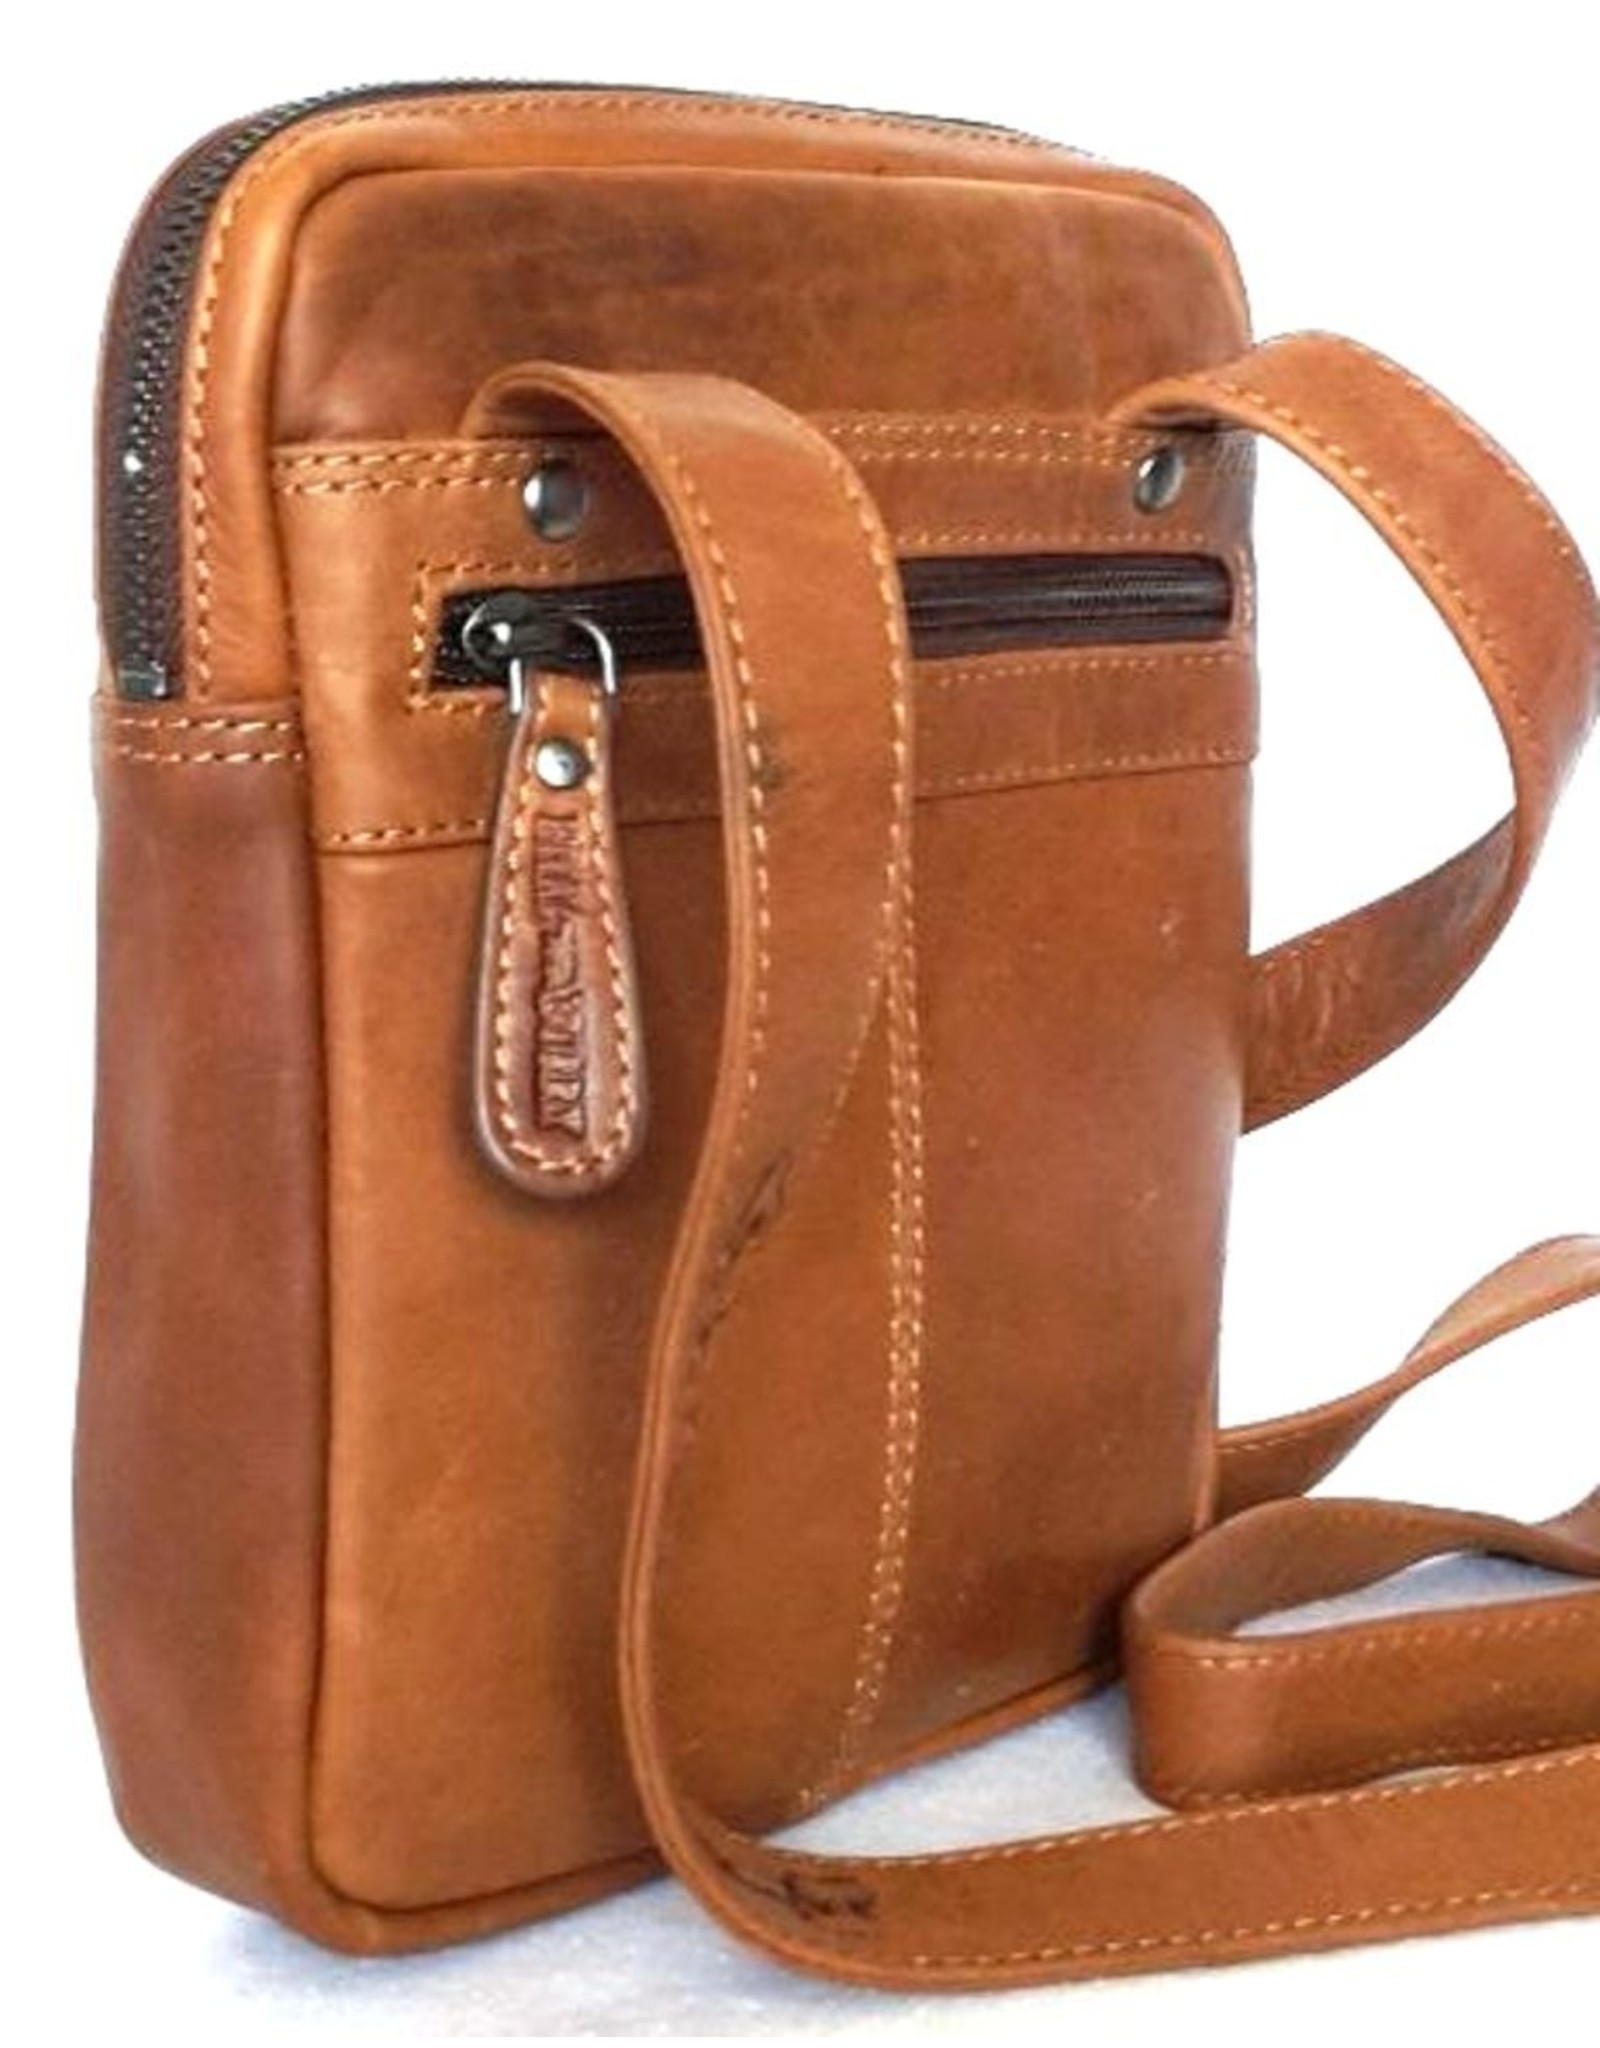 HillBurry Leather bags - Hillburry leather shoulder bag tan 1874